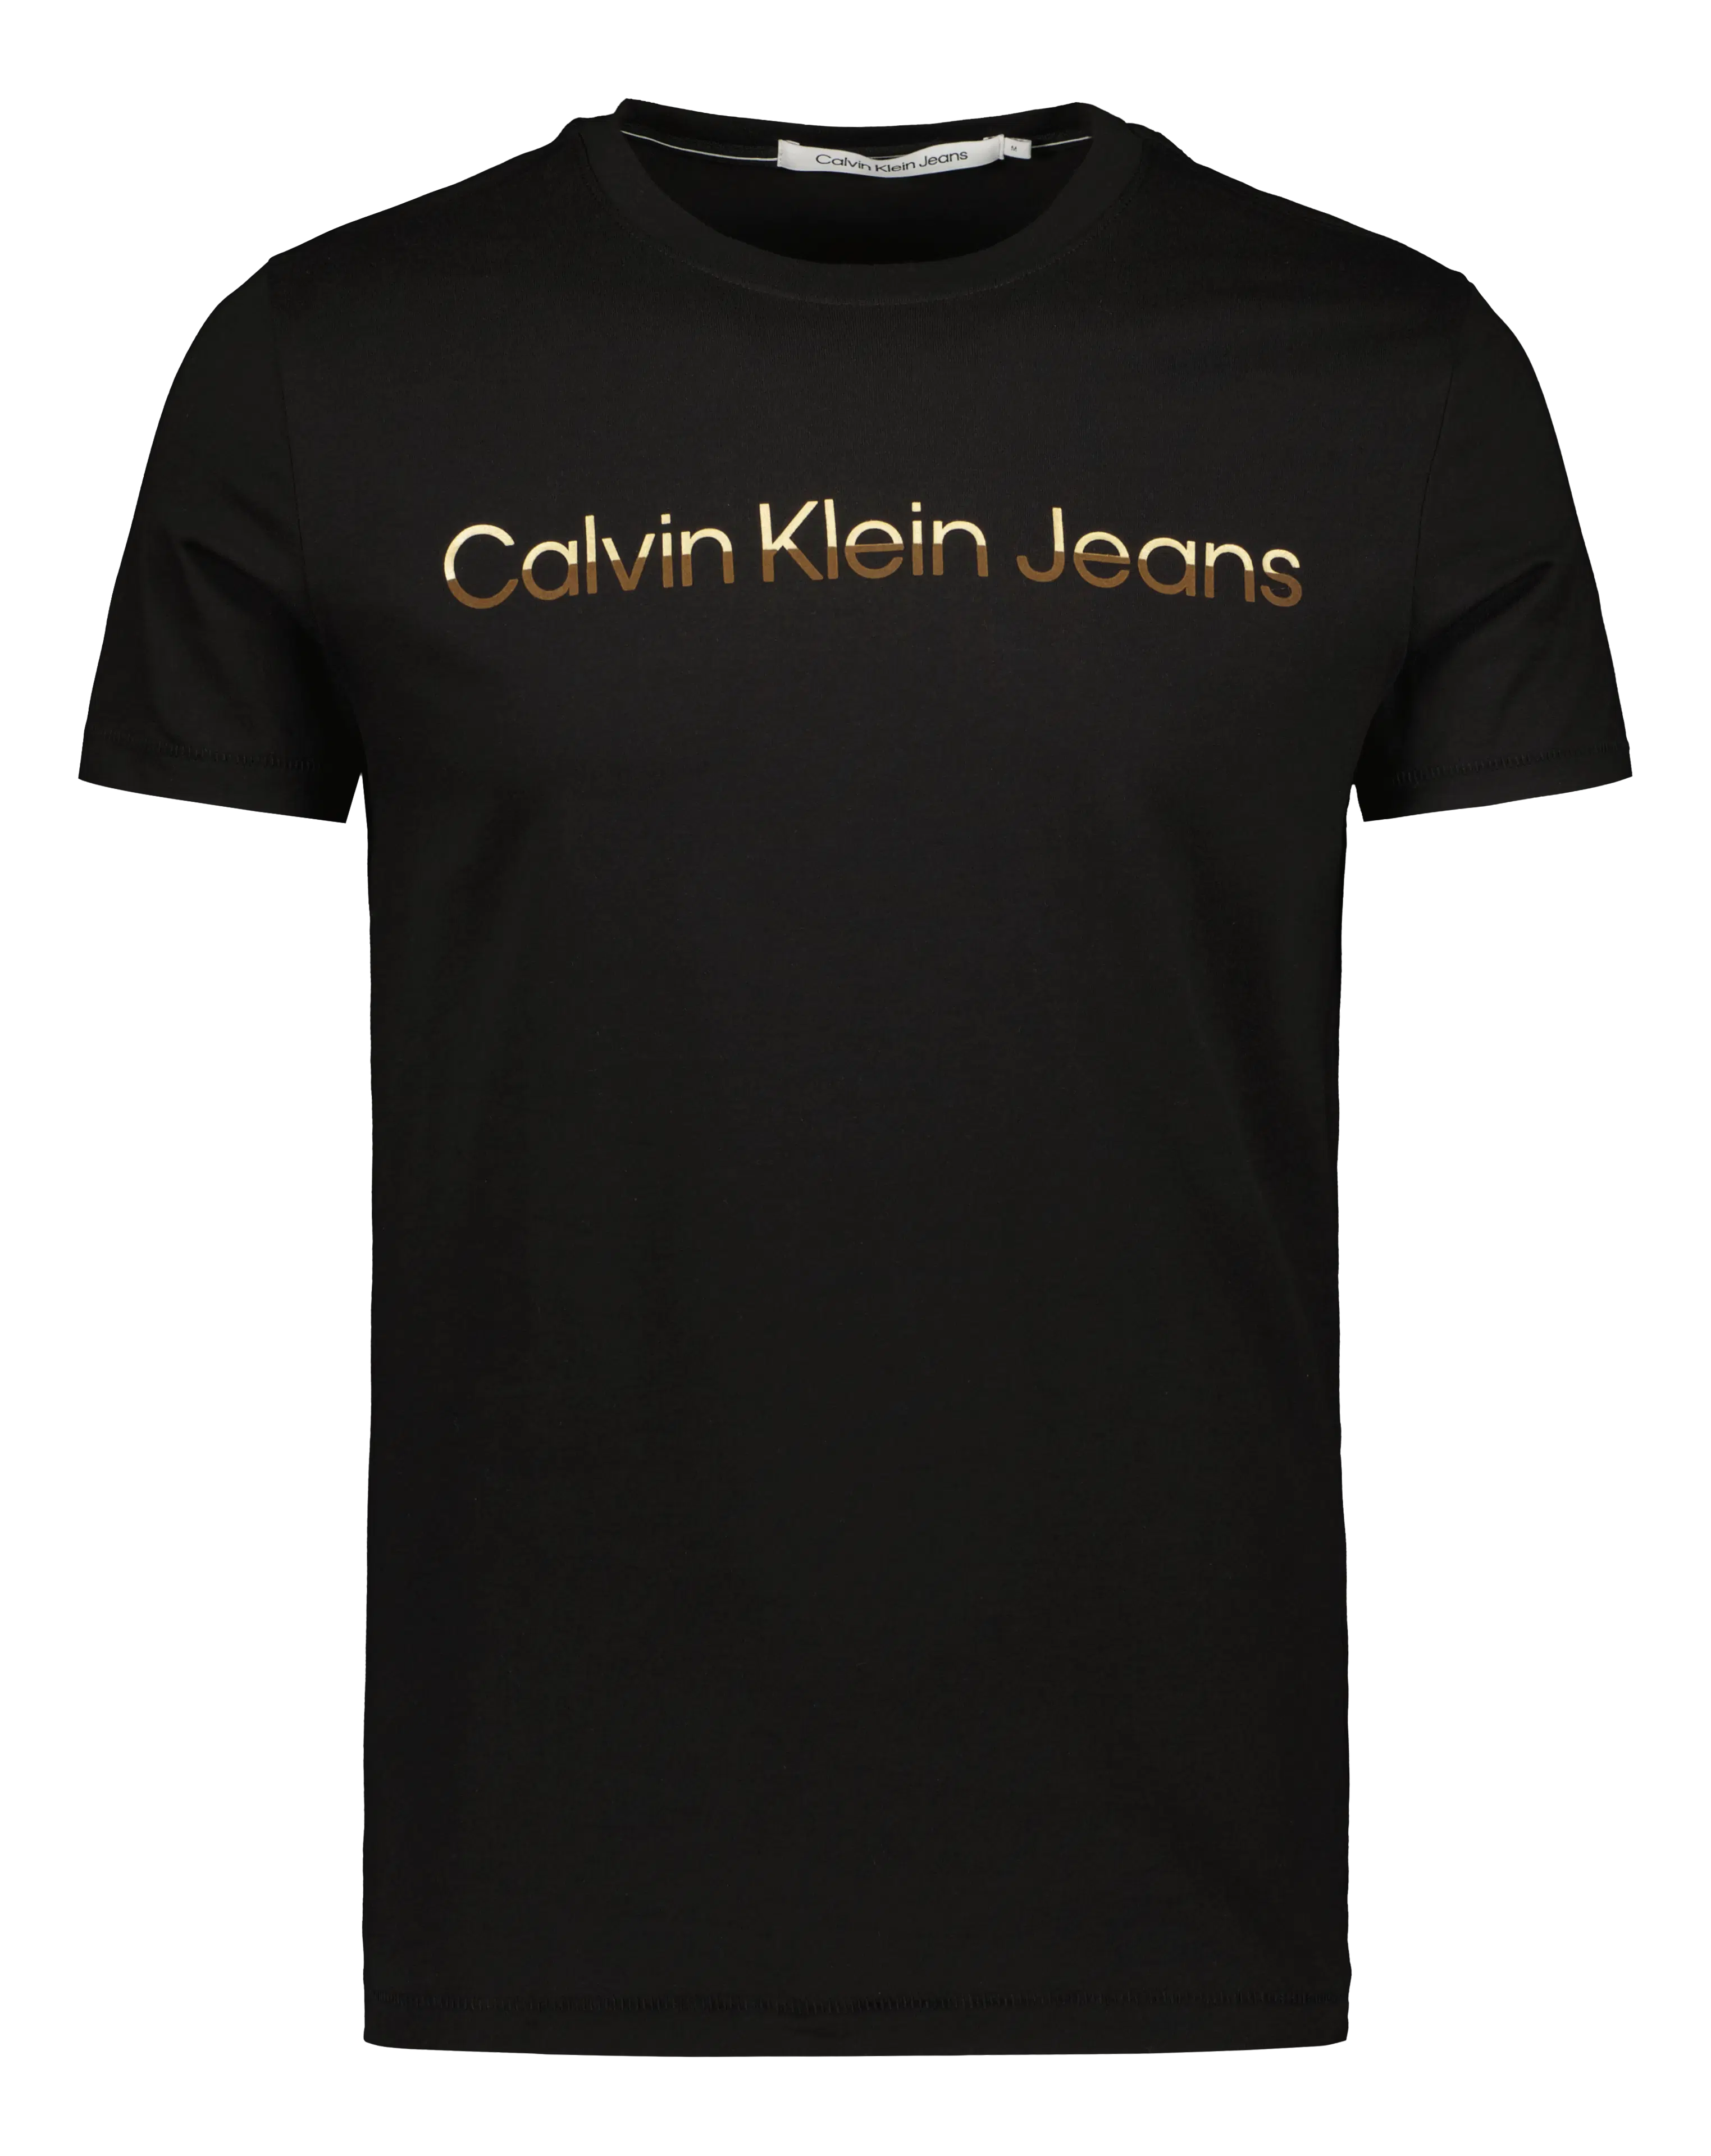 Calvin Klein Jeans Mixed institutional t-paita